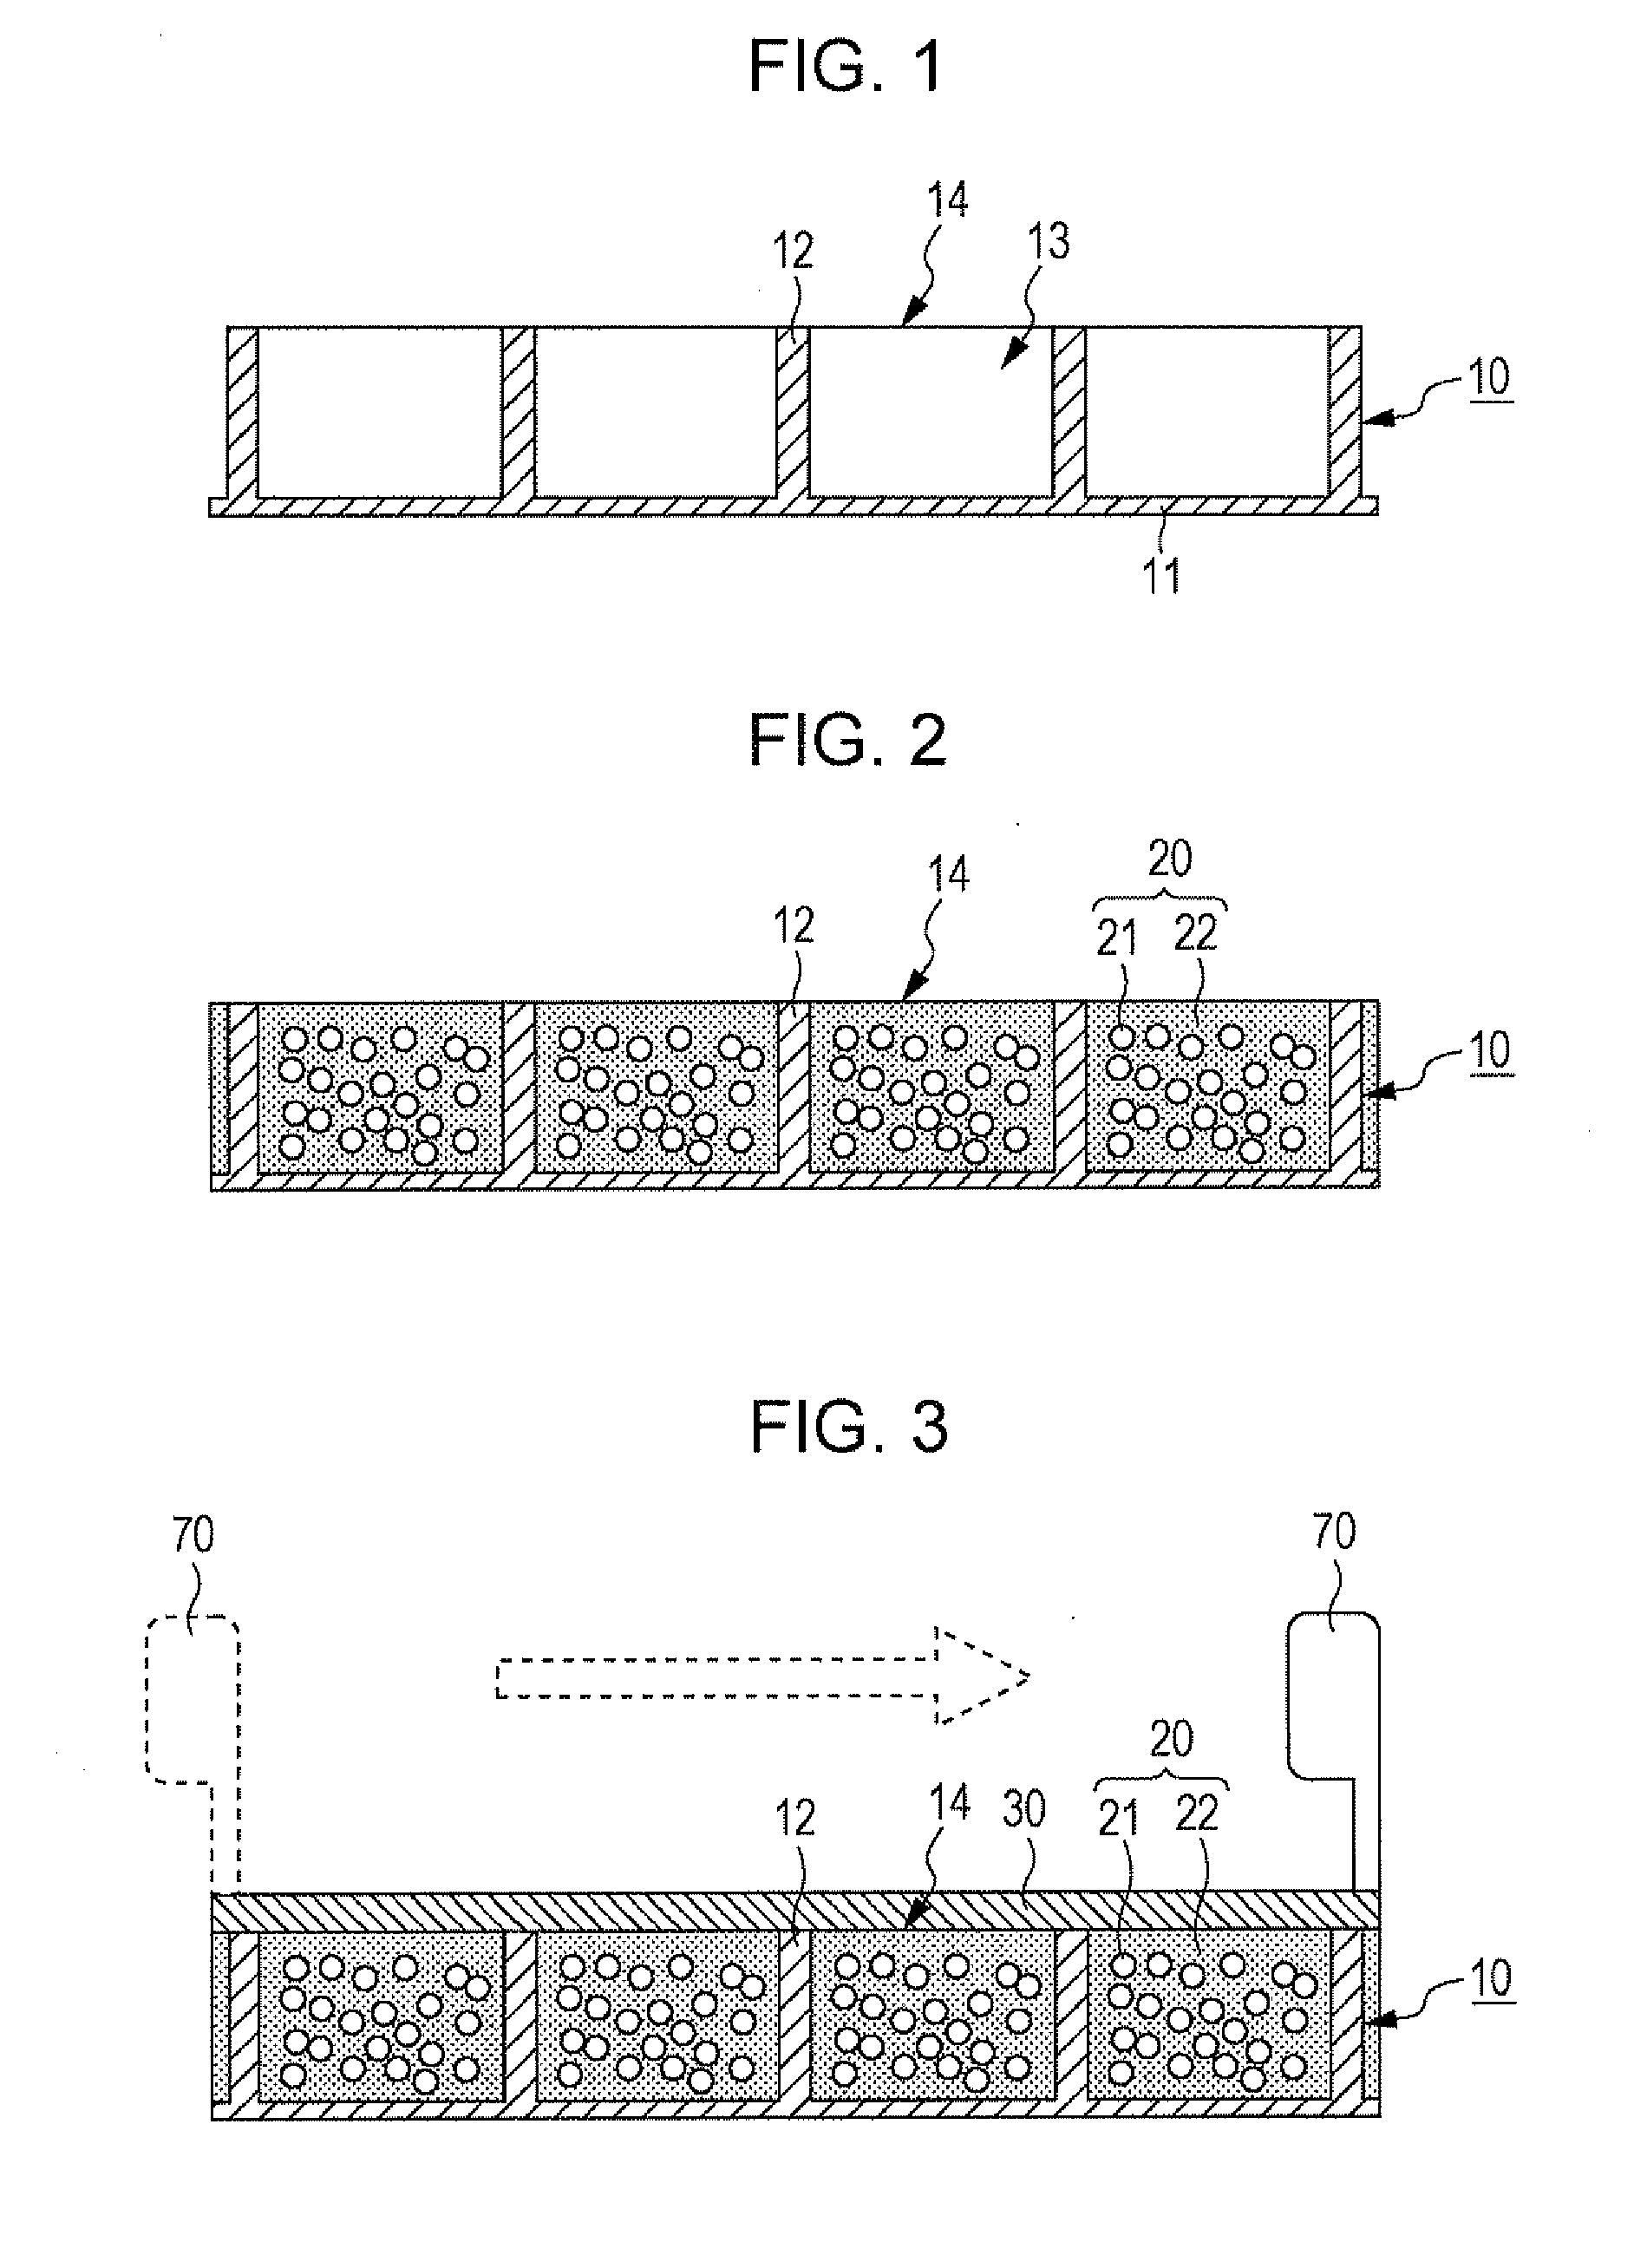 Method for manufacturing electrophoretic display apparatus